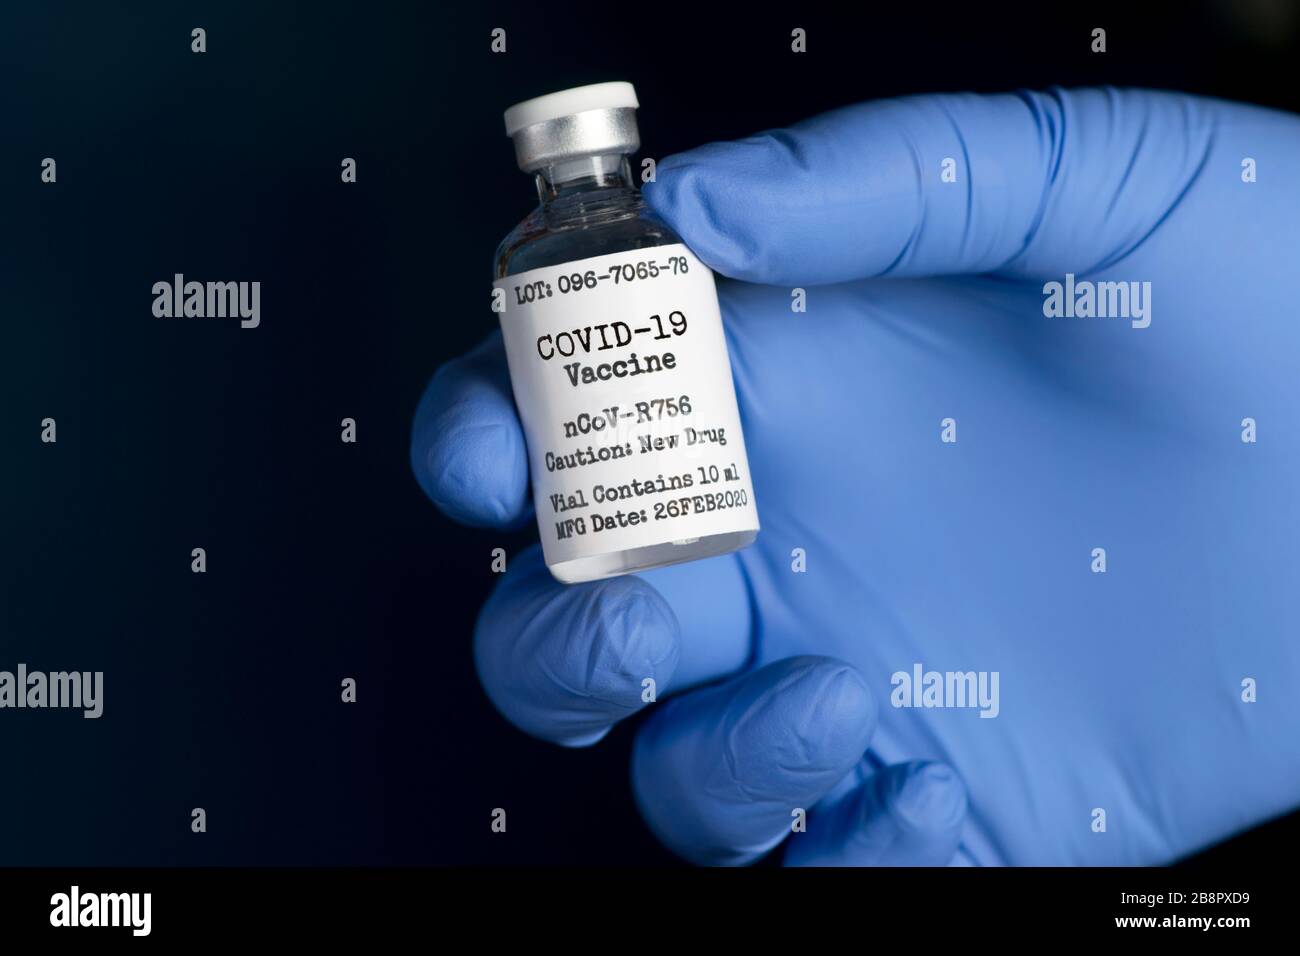 Coronavirus Covid-19 vaccine vial in gloved hand of nurse on dark background. Stock Photo